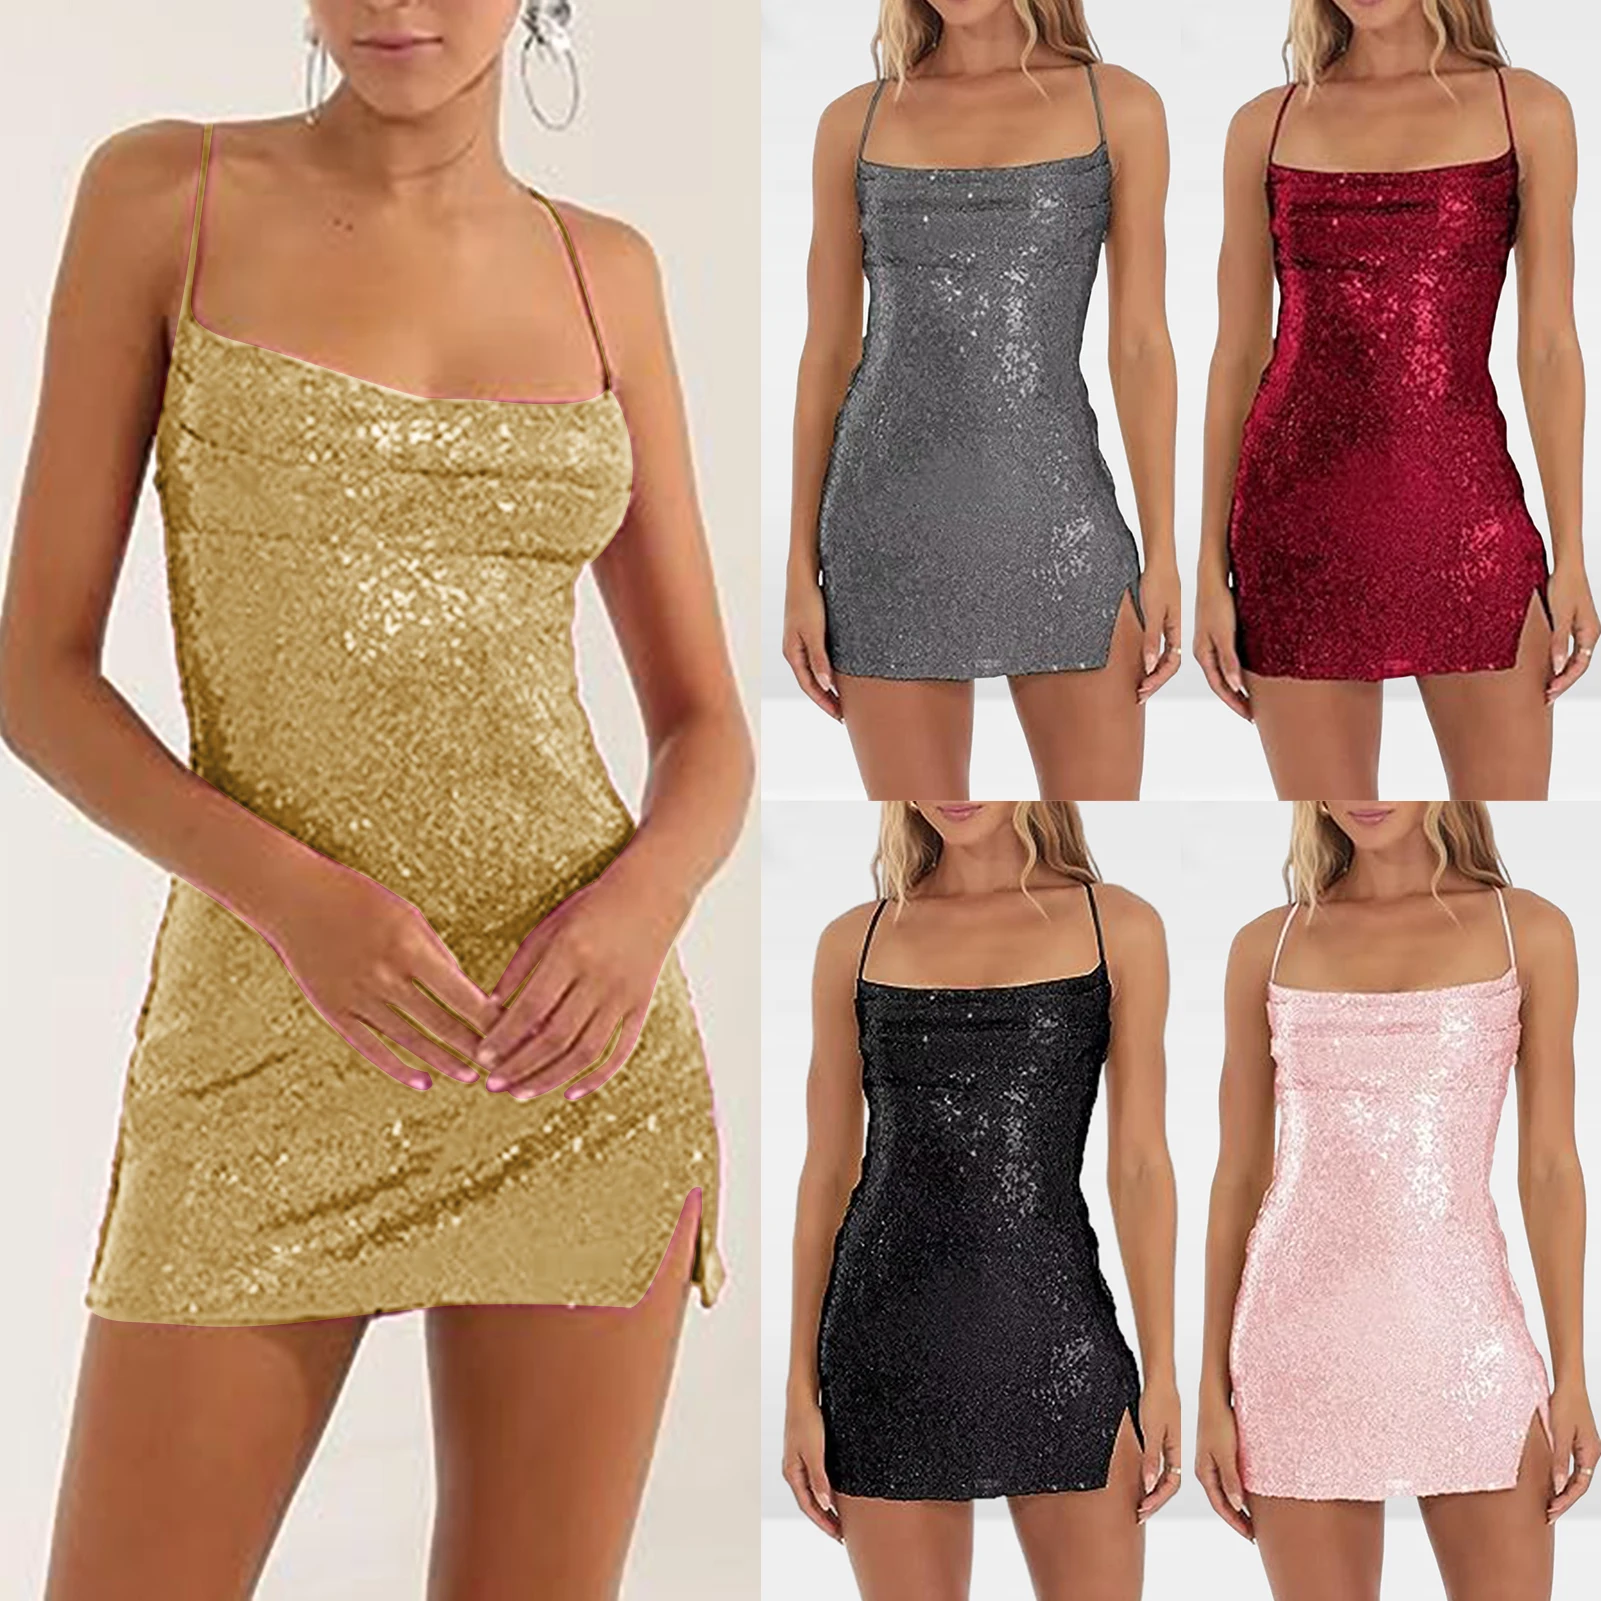 

Women Side Split Dress Sparkly Sexy Sheath Dress Shiny Spaghetti Strap Dress Giltter Slim Fit Adjustable Straps Homecoming Dress